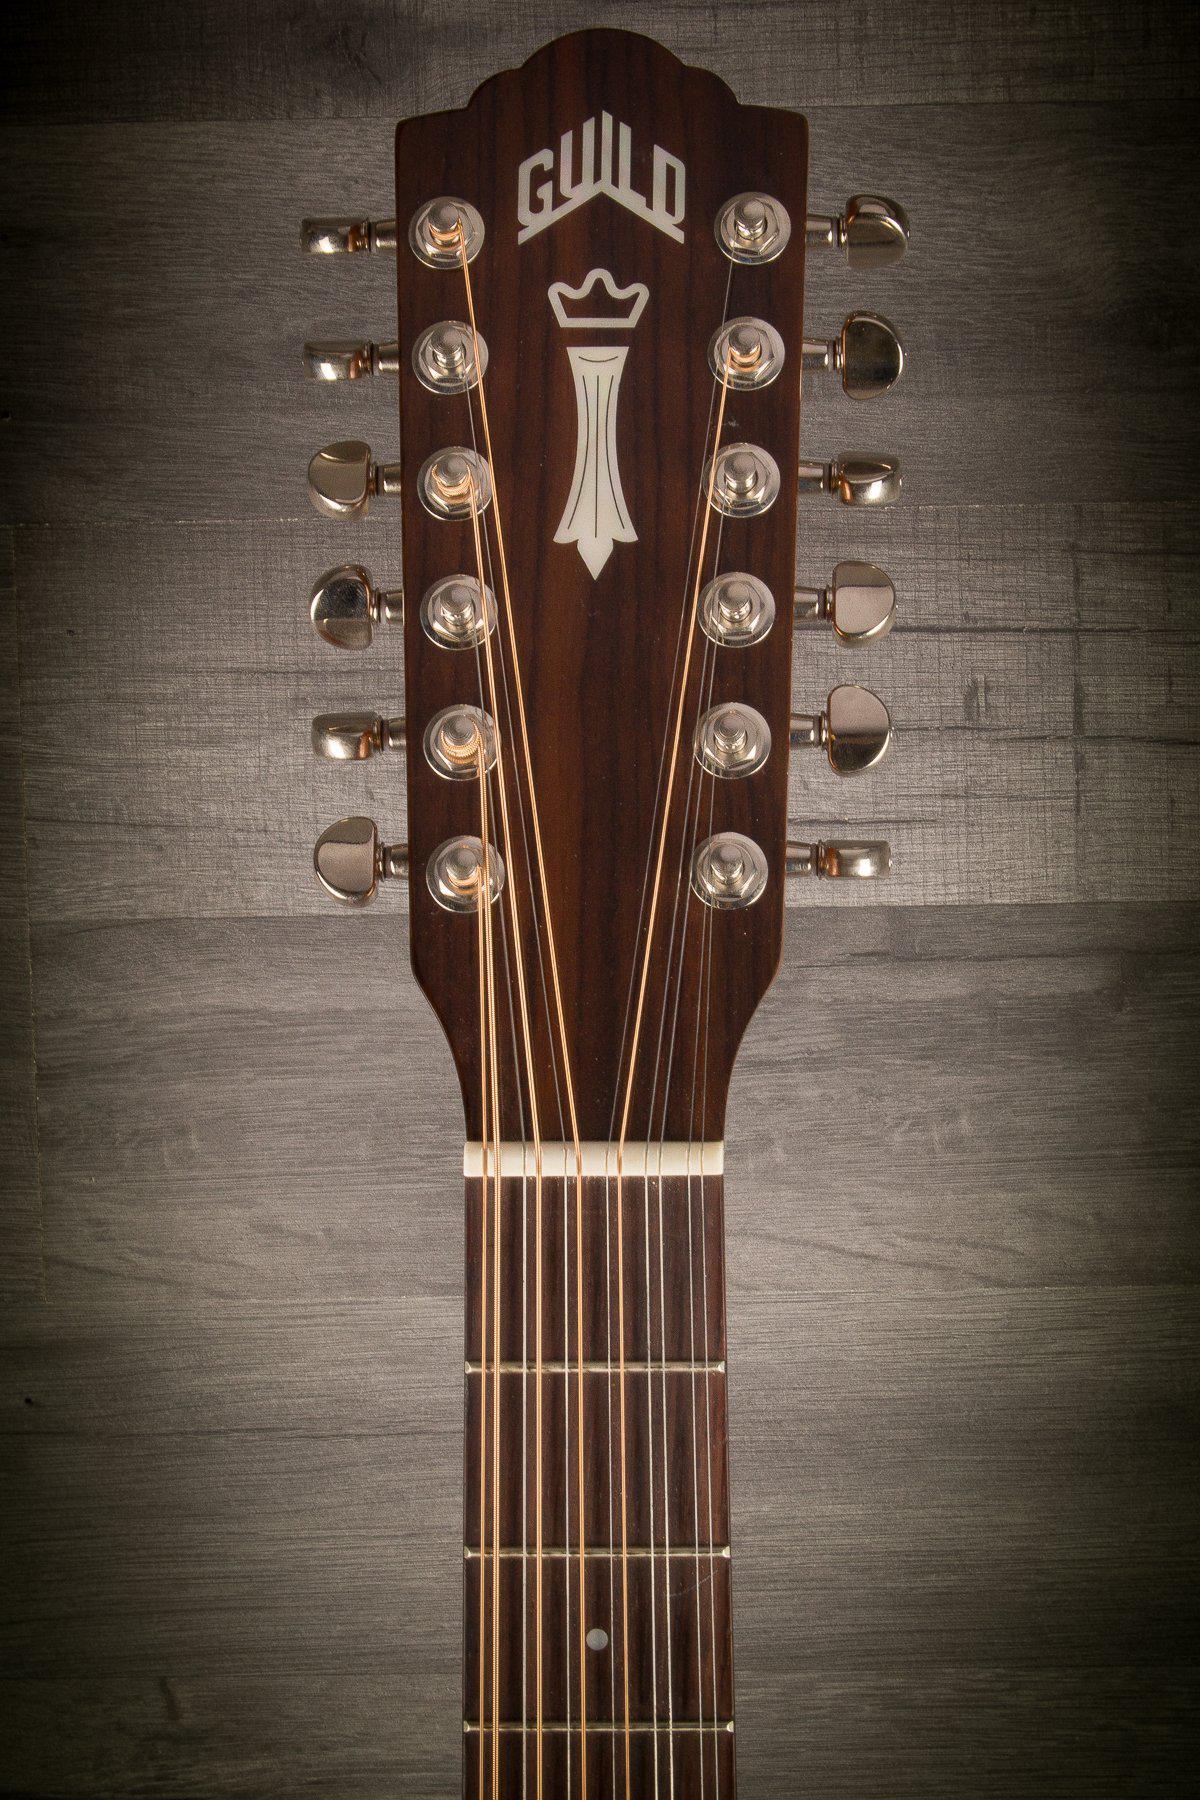 Guild Acoustic Guitar USED - Guild D-1212 String Acoustic Guitar